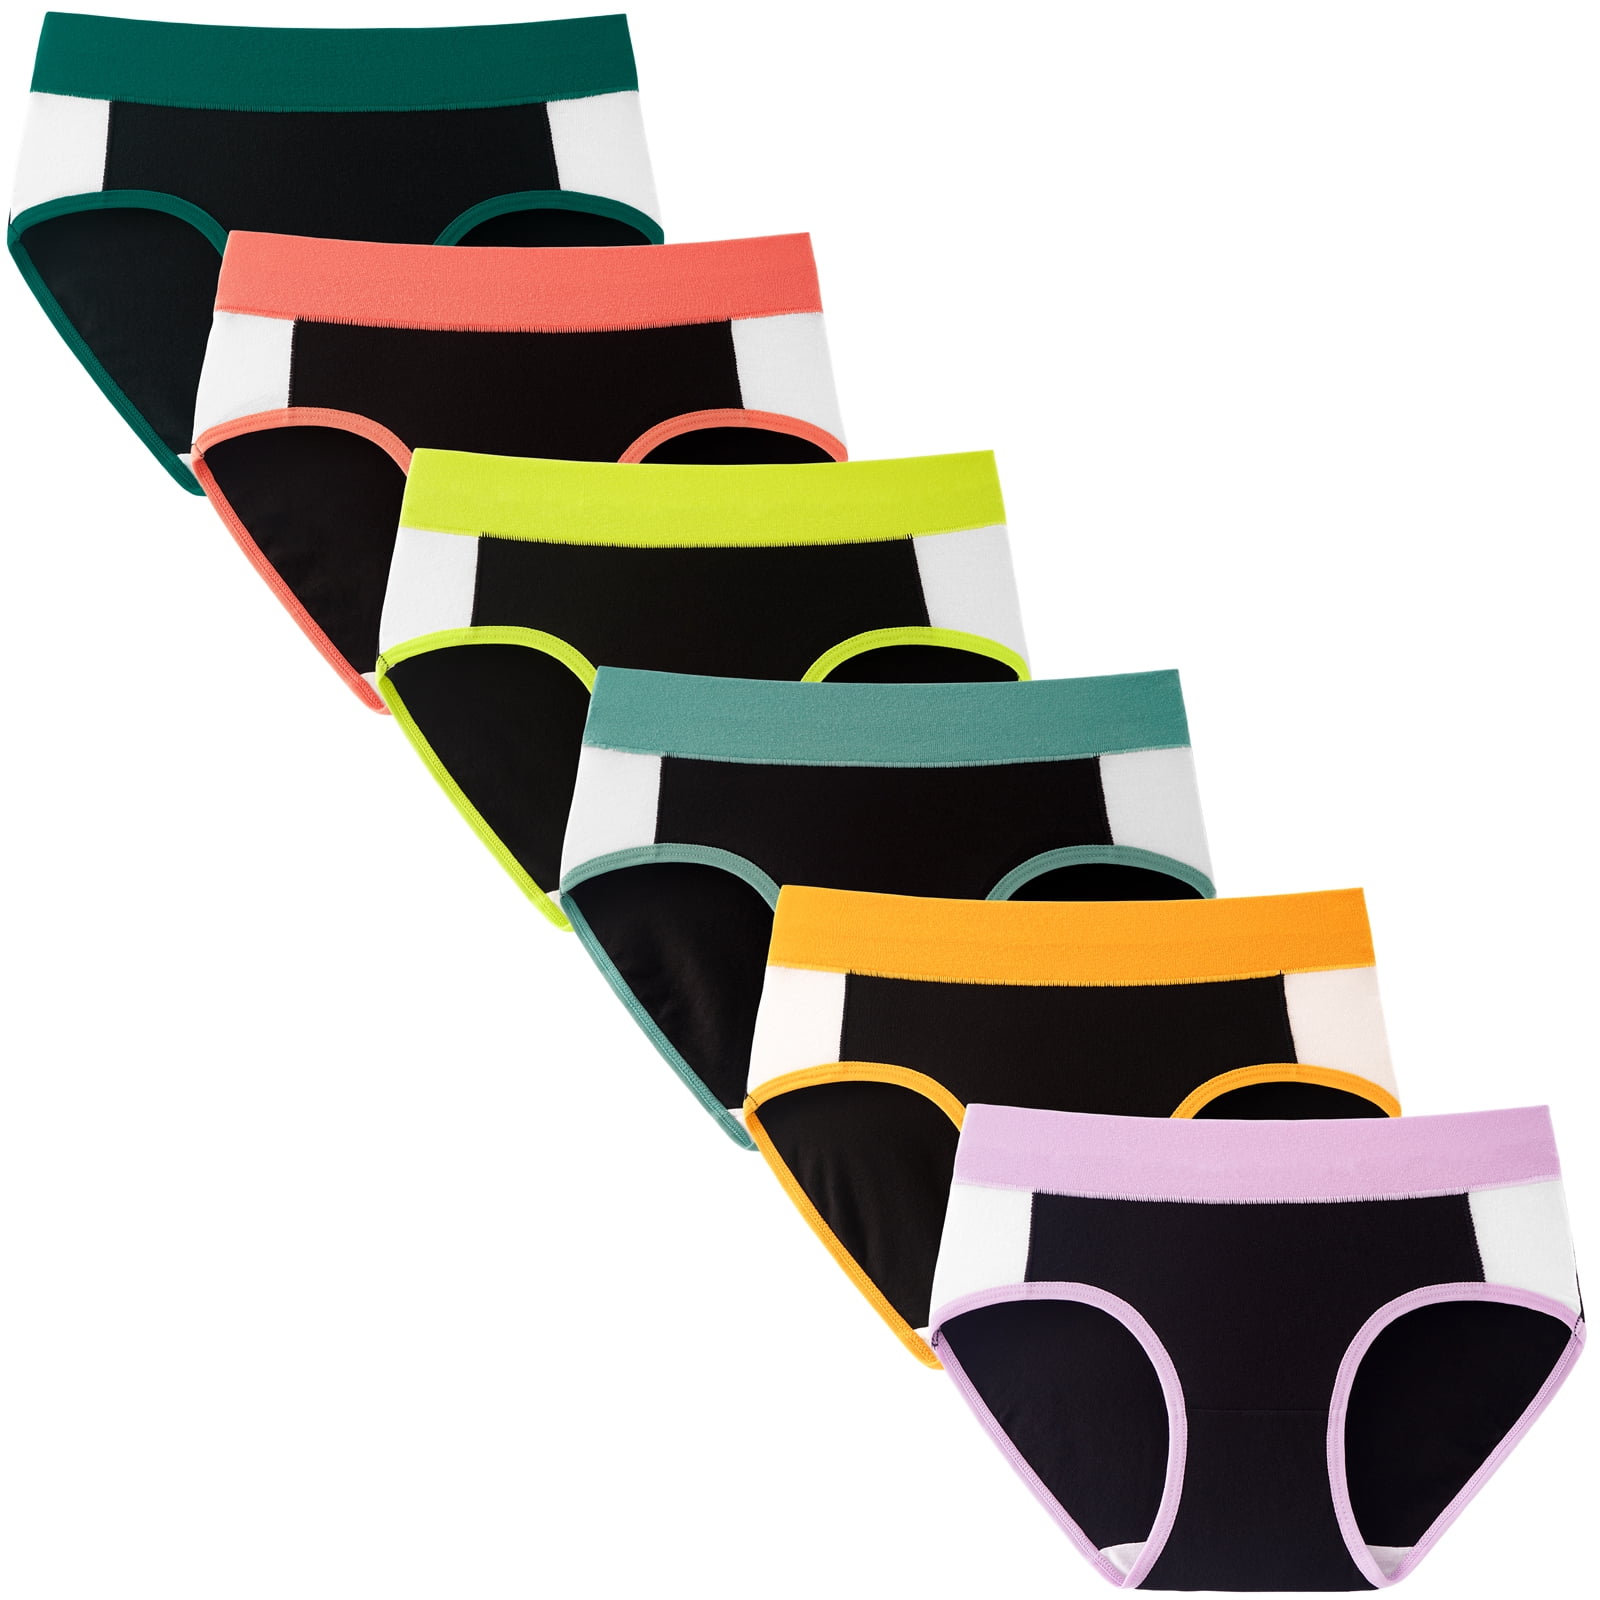 INNERSY Teen Girls'Underwear Cotton Briefs Wide Waistband Sporty Panties 6  Pack (XL(14-16 yrs), Dark)